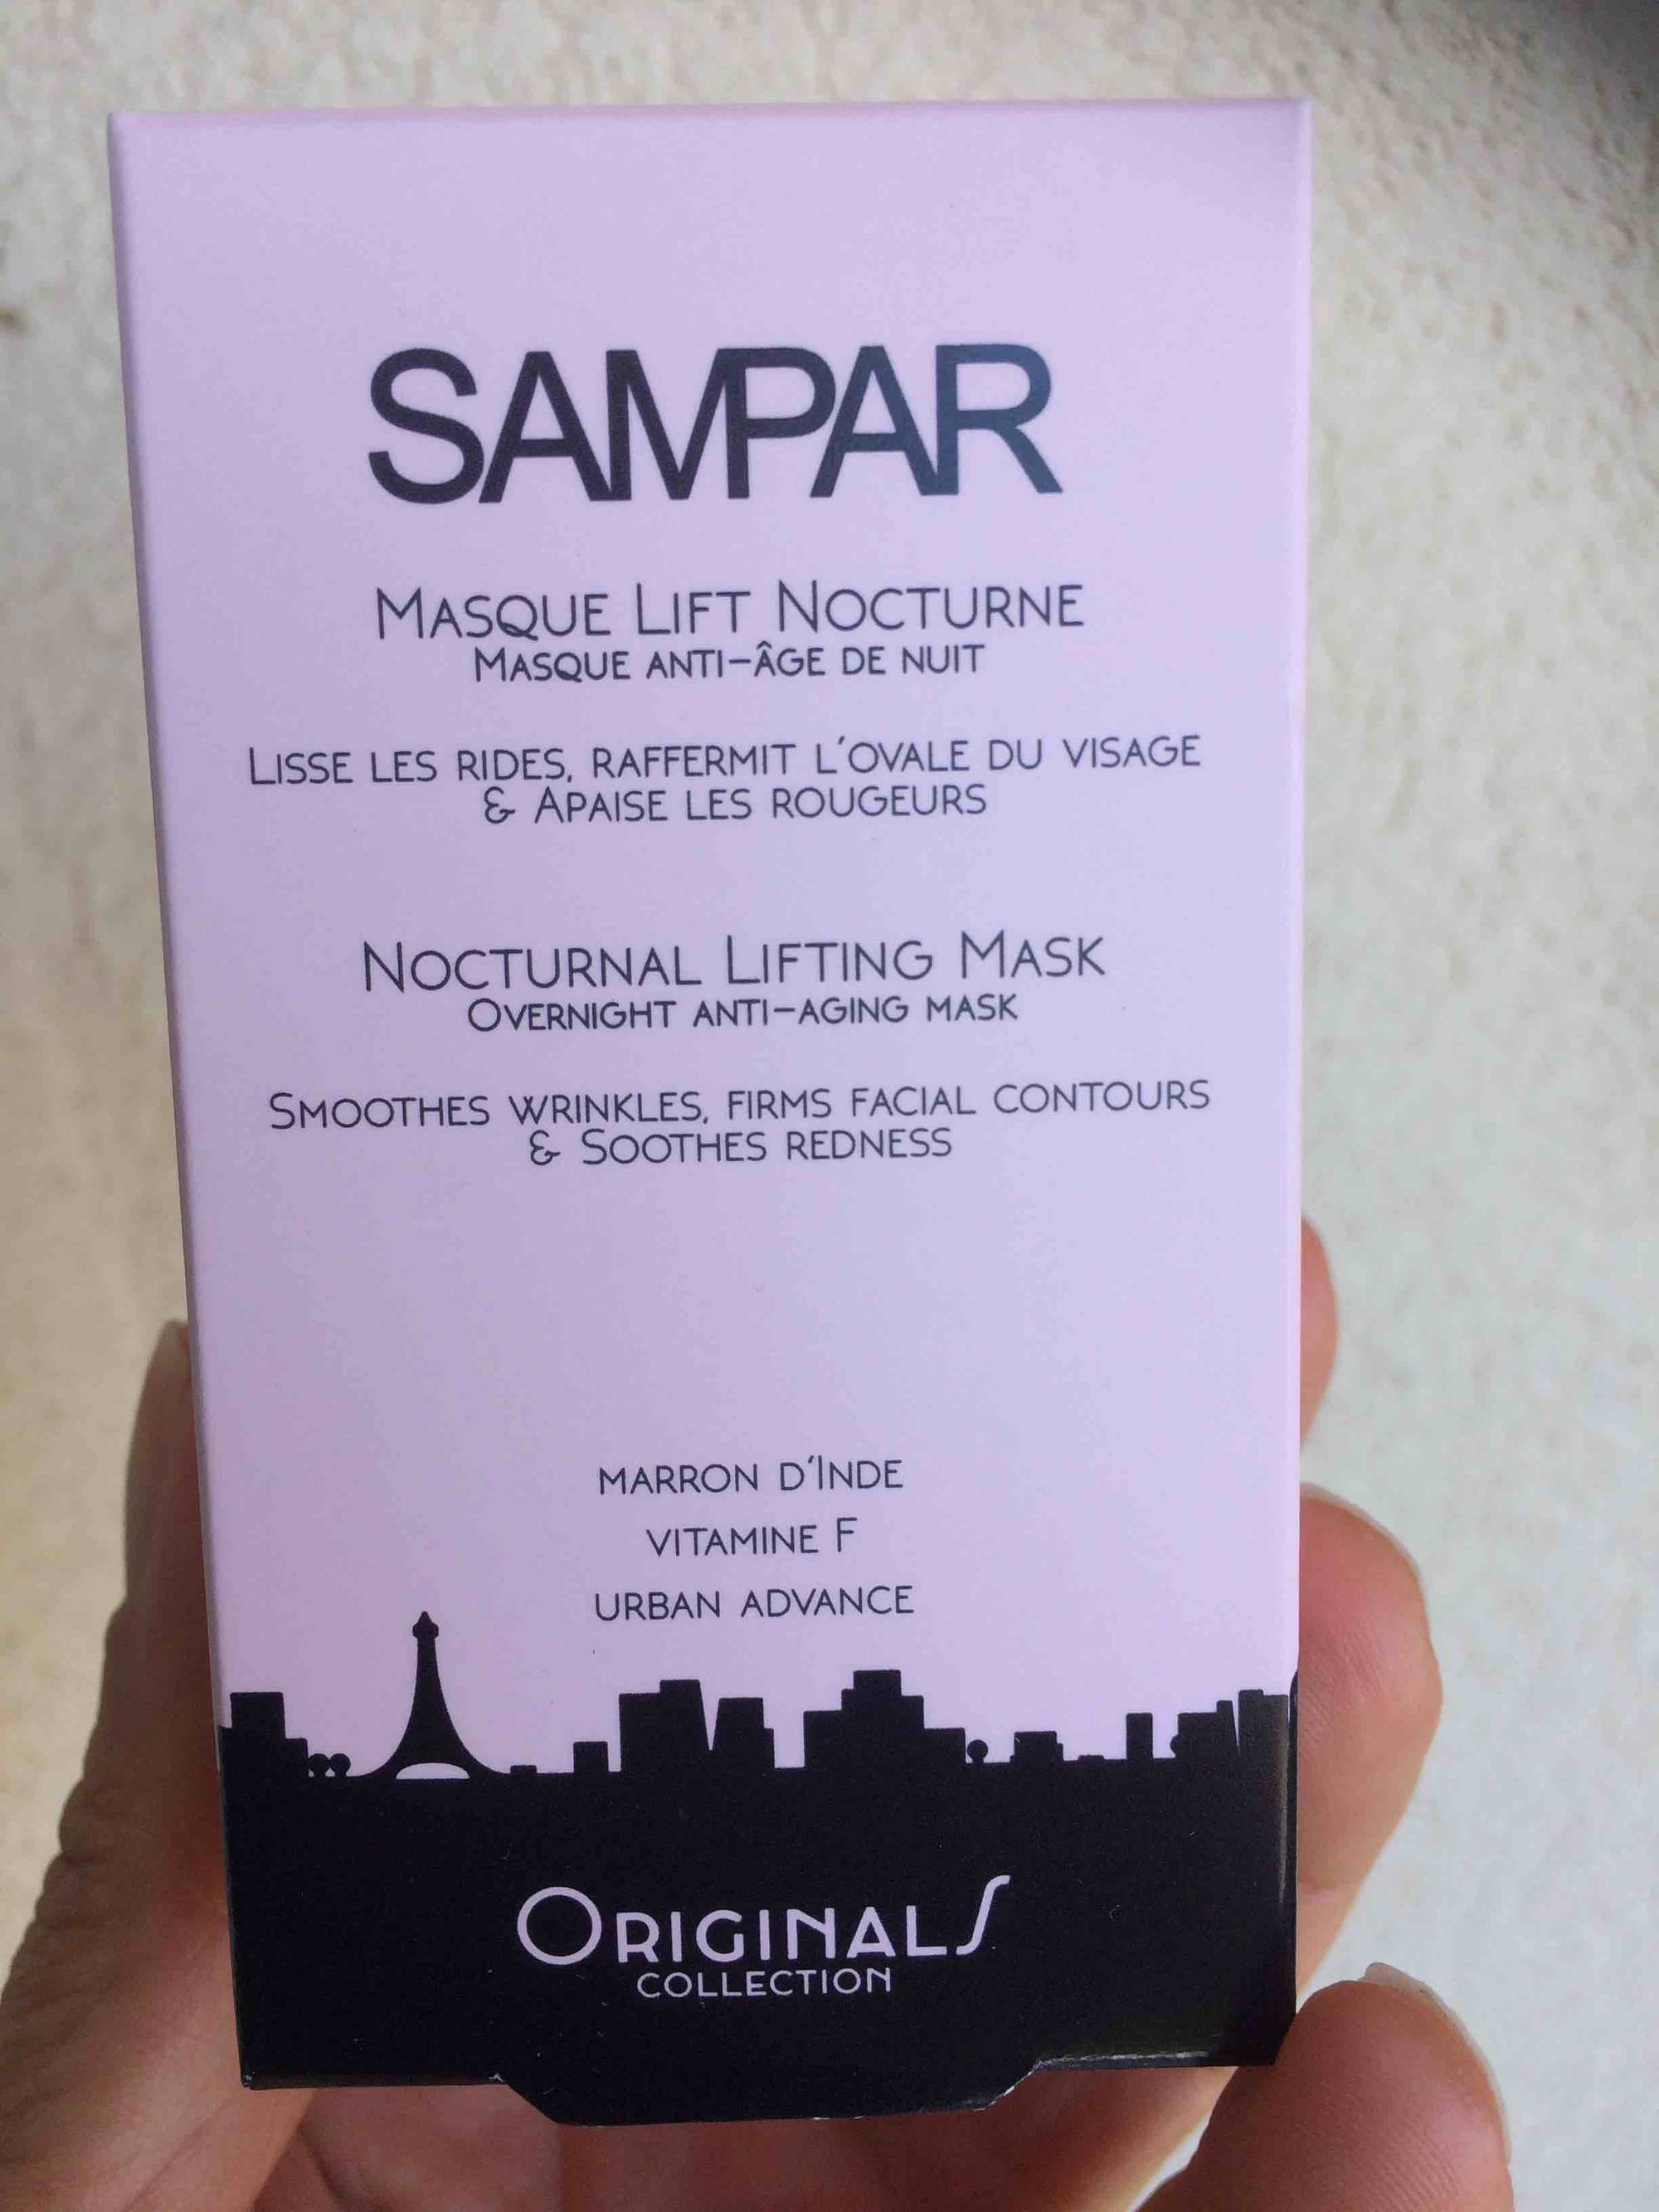 SAMPAR - Marron d'Inde - Masque lift nocturne